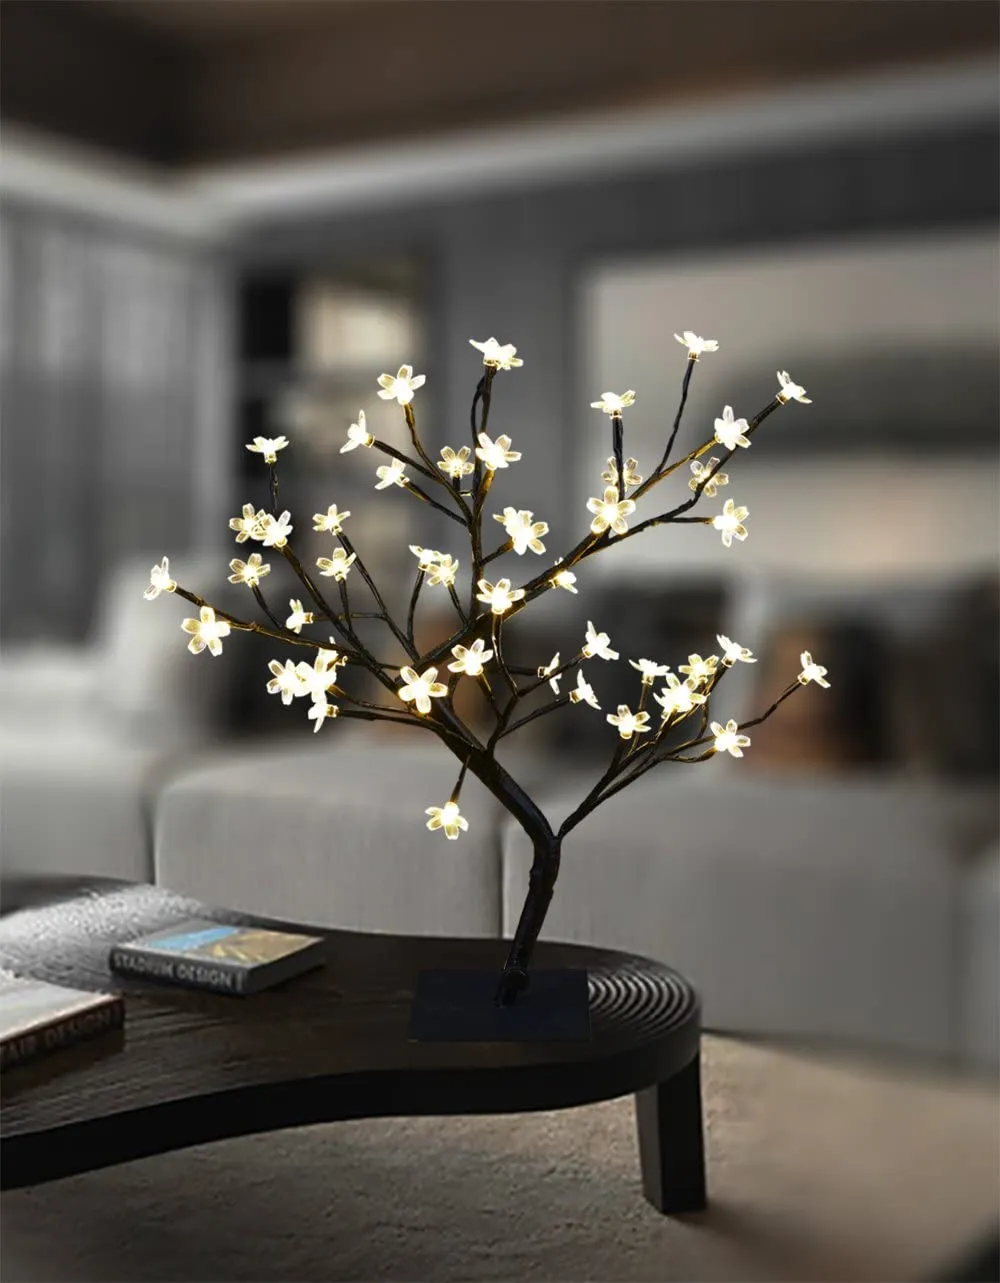 Cherry Blossom Bonsai Tree - modern office decor ideas